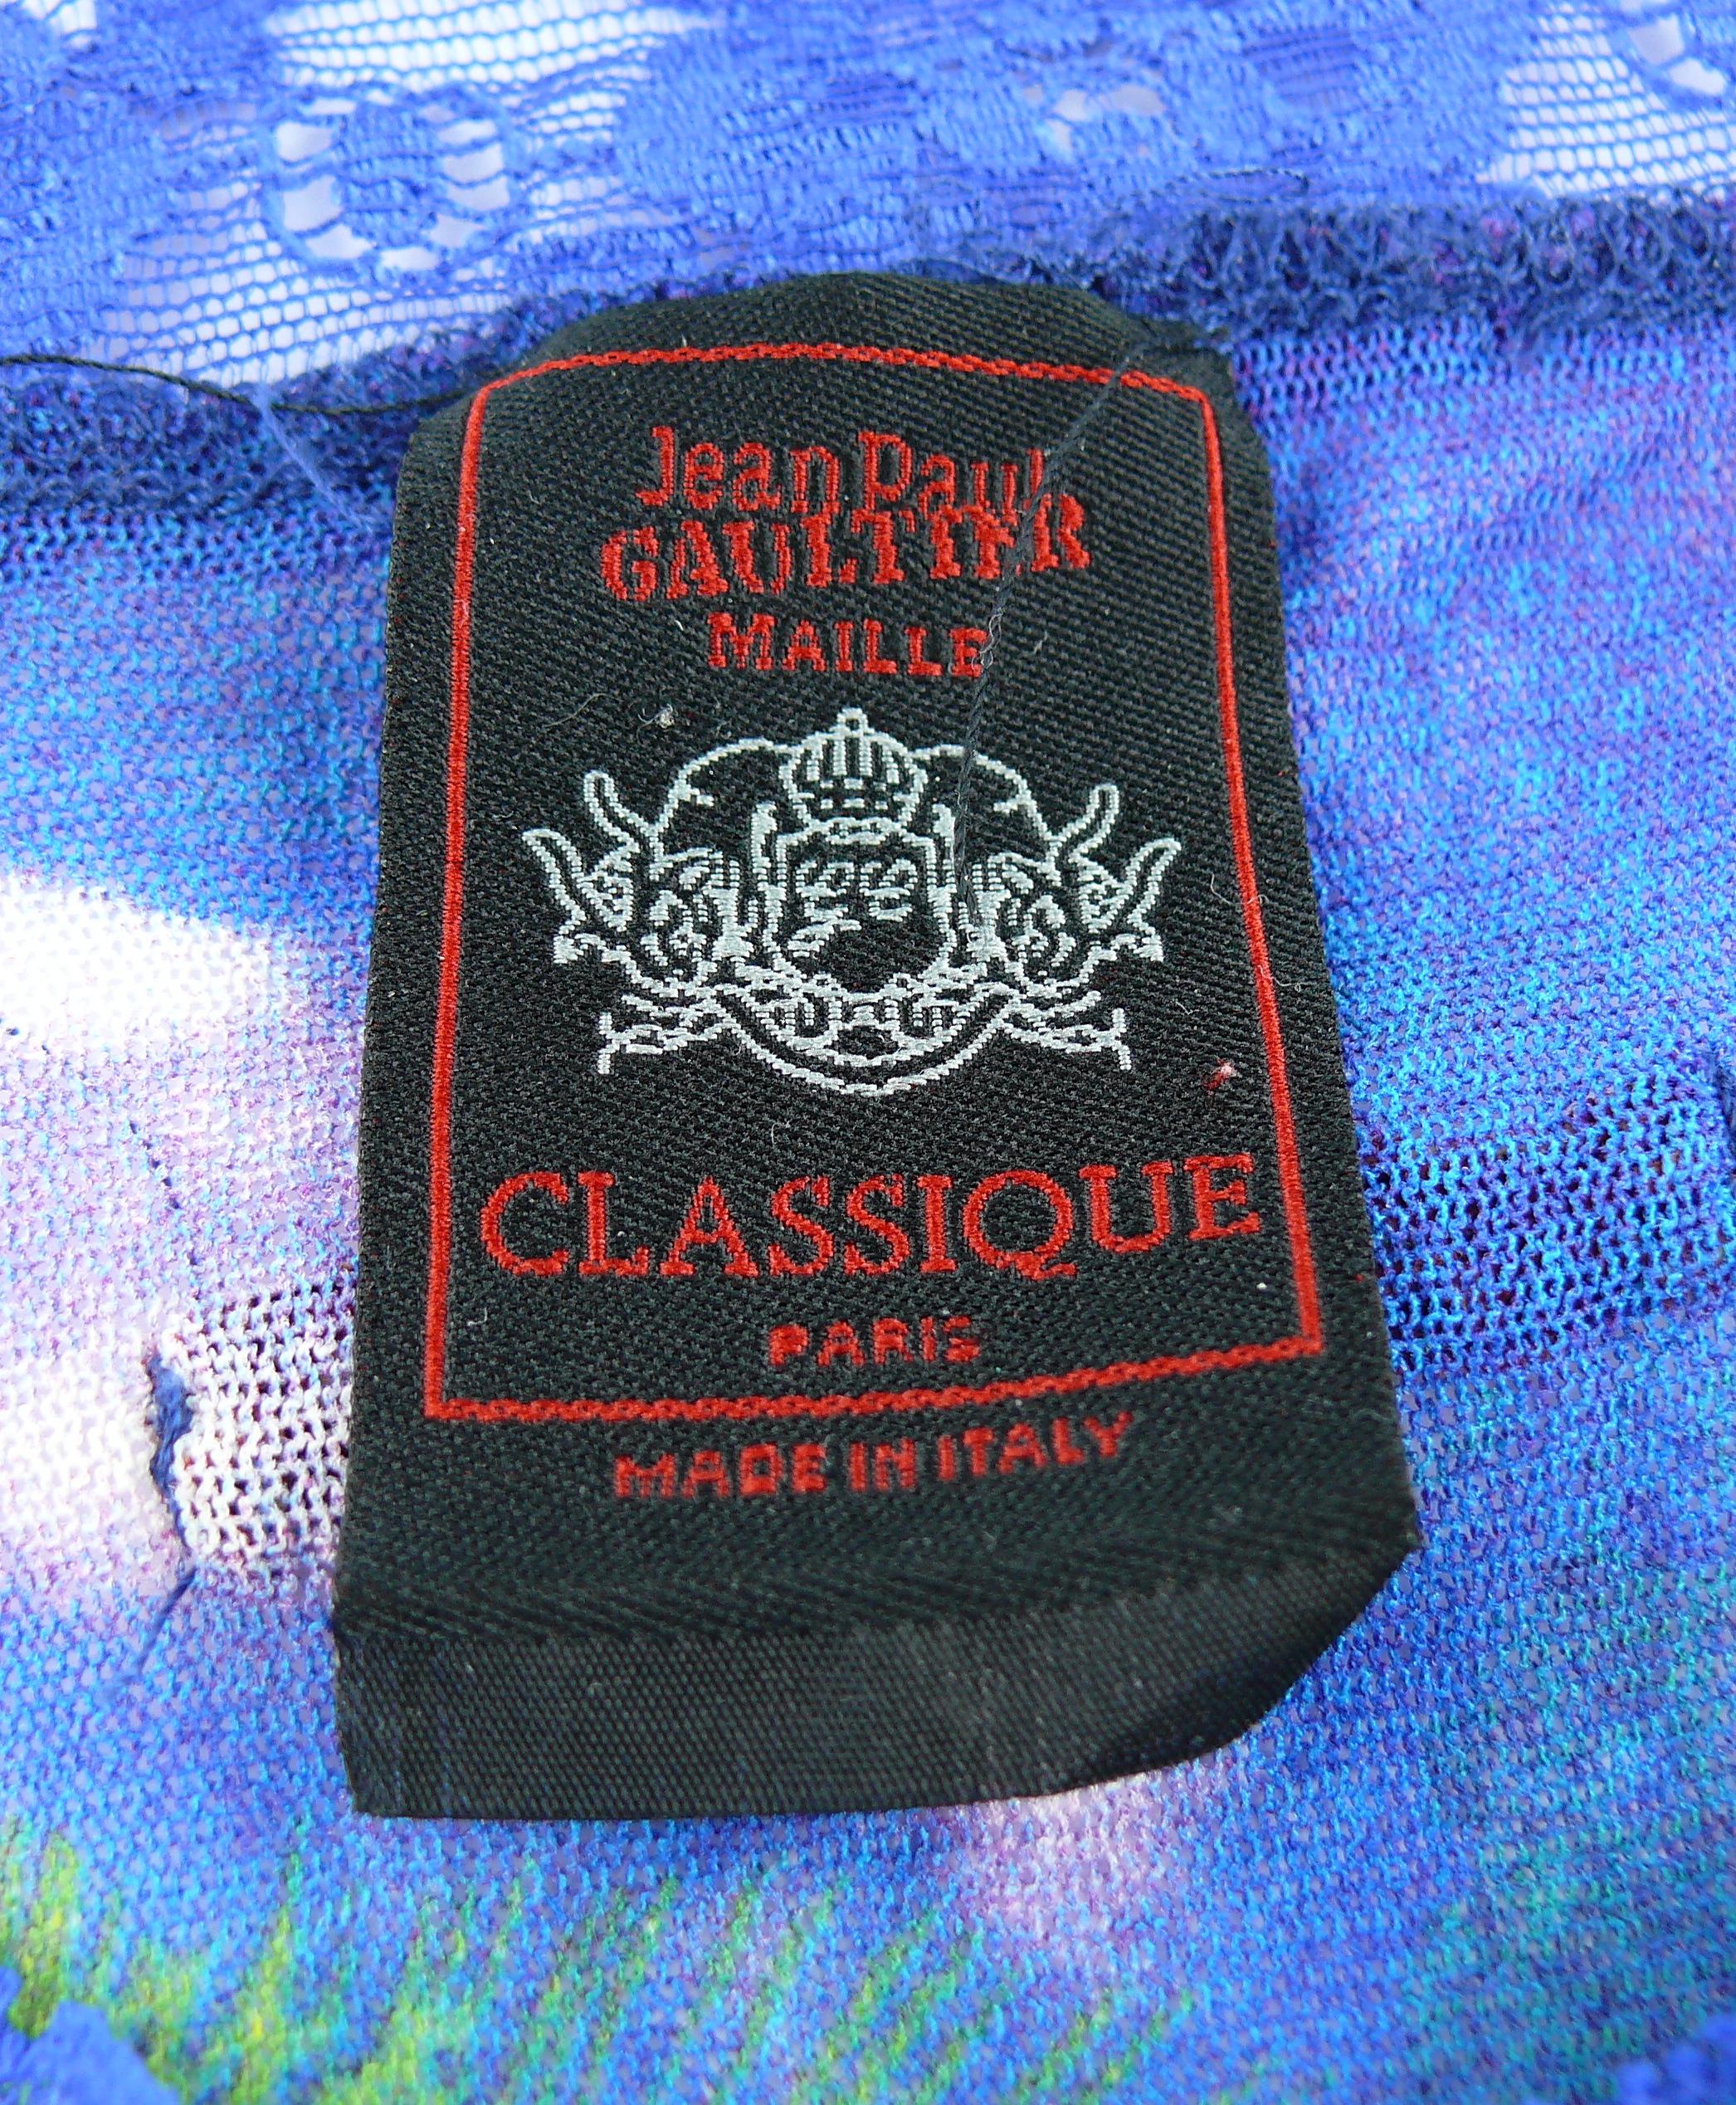 Jean Paul Gaultier Vintage Hindu Deity Sheer Mesh Skirt and Top Ensemble For Sale 1